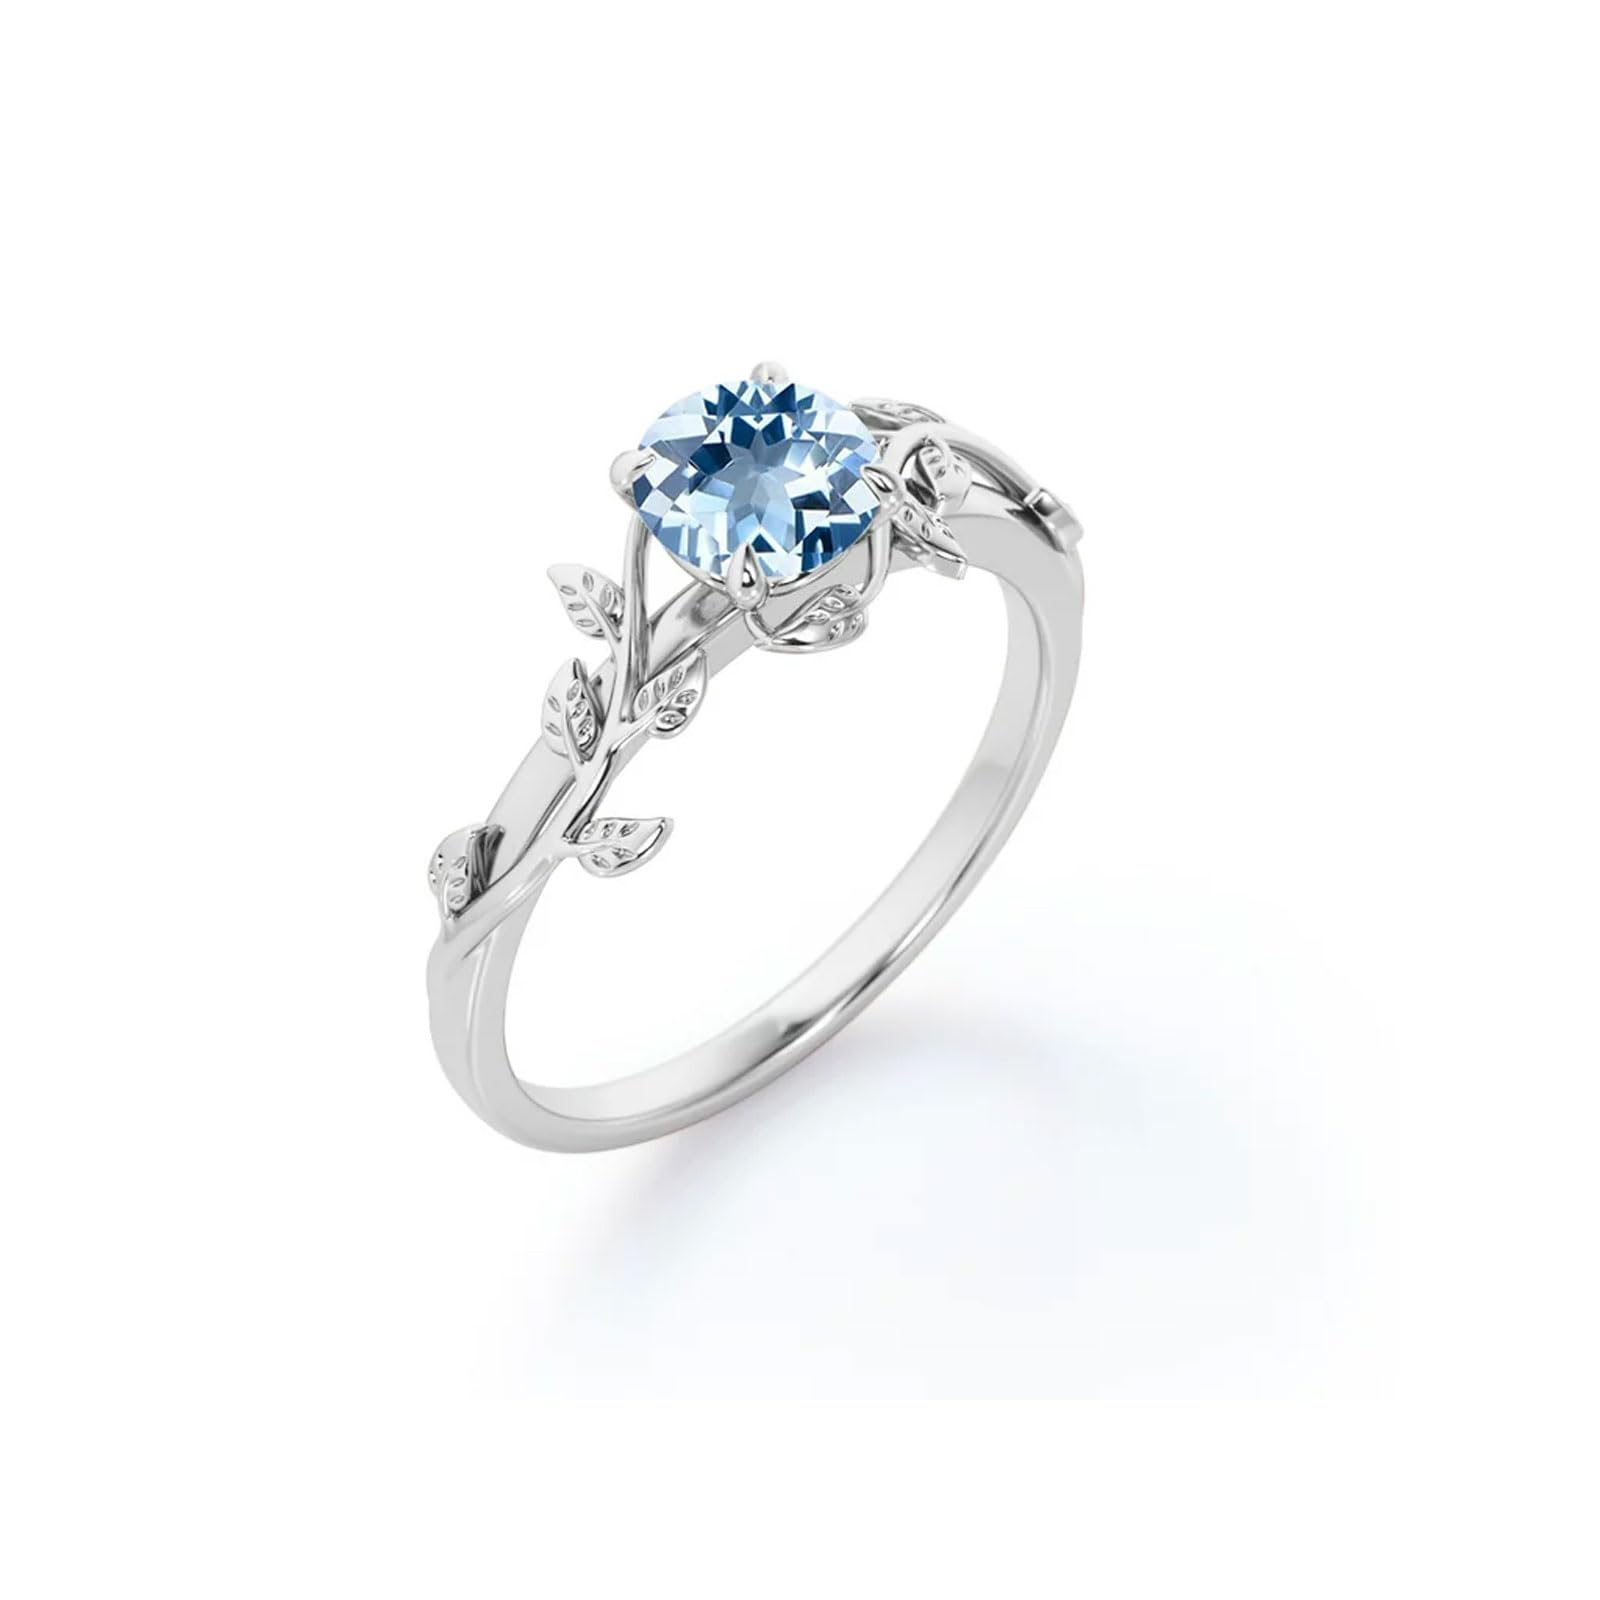 MRENITE Silver/10K/14K/18K Gold Vintage Vine Gemstone Ring for Women 1 Carat Twig Leaf Design Round Birthstone Statement Ring Jewelry Gift for Her